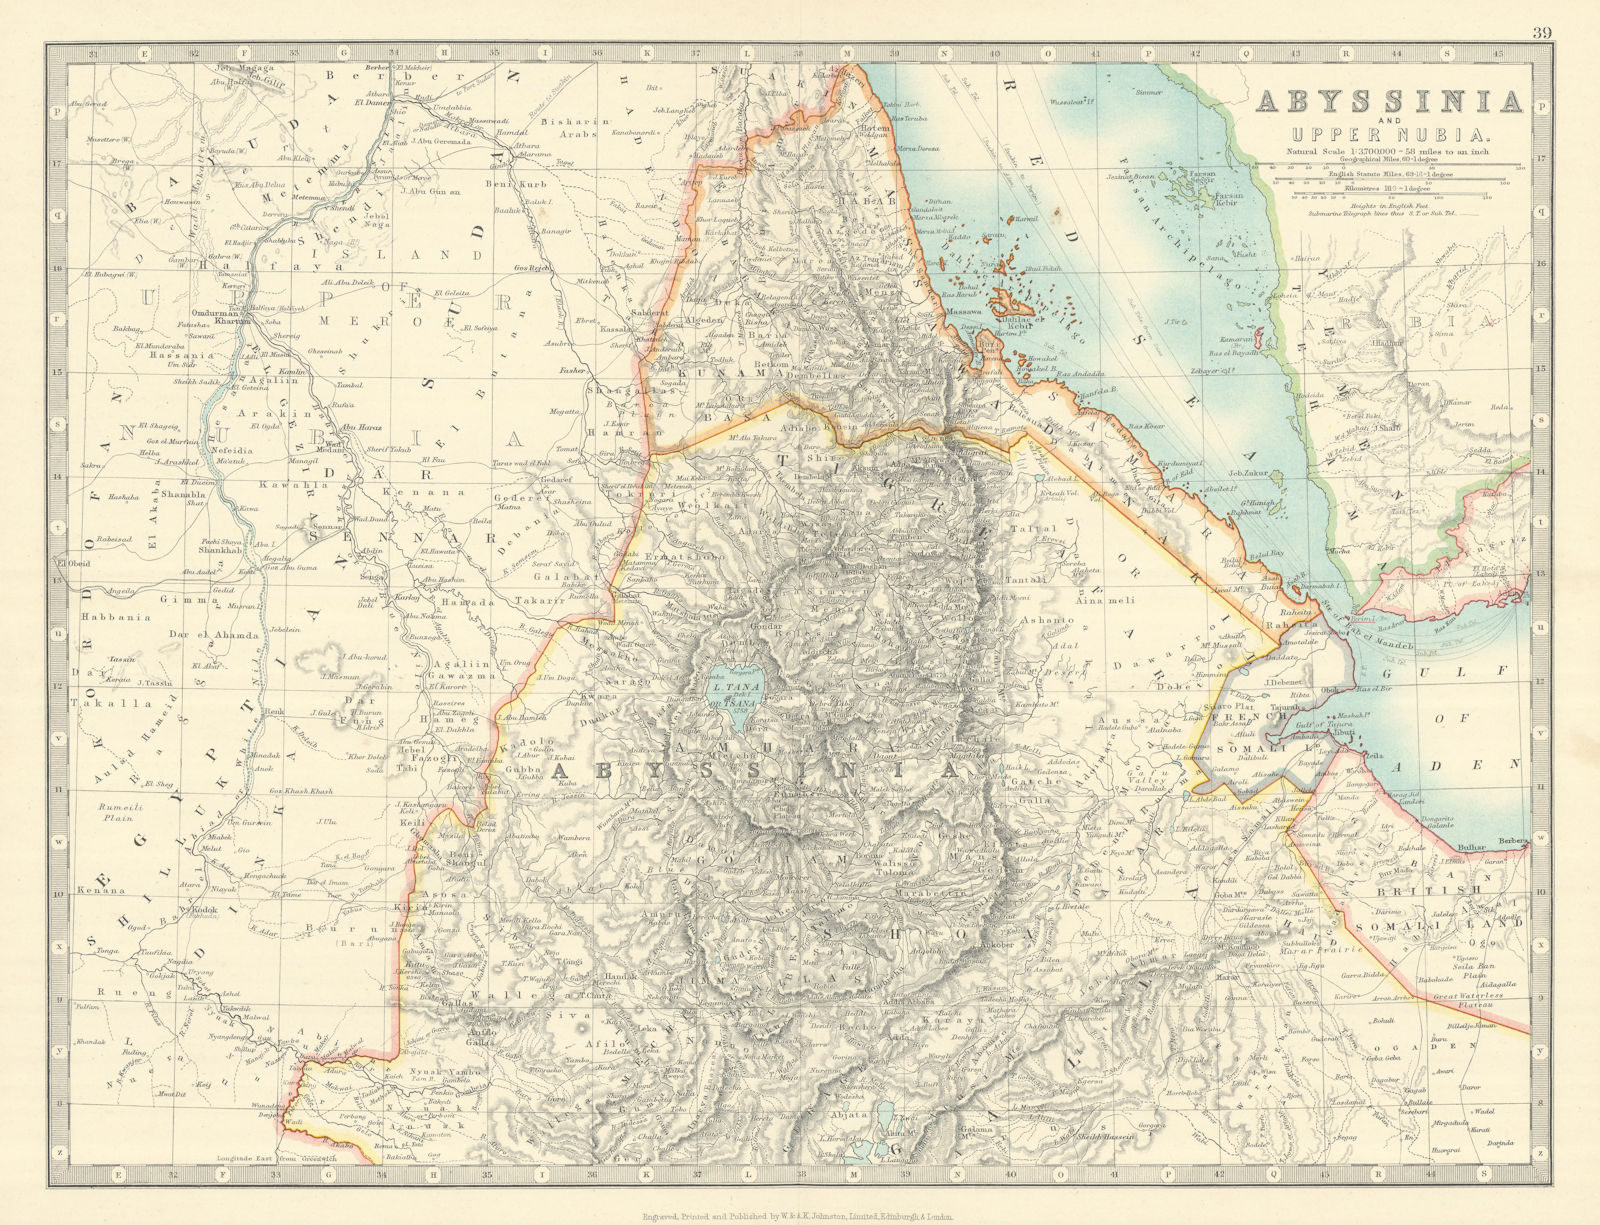 ABYSSINIA & UPPER NUBIA. Ethiopia Erirtrea French Somaliland. JOHNSTON 1913 map